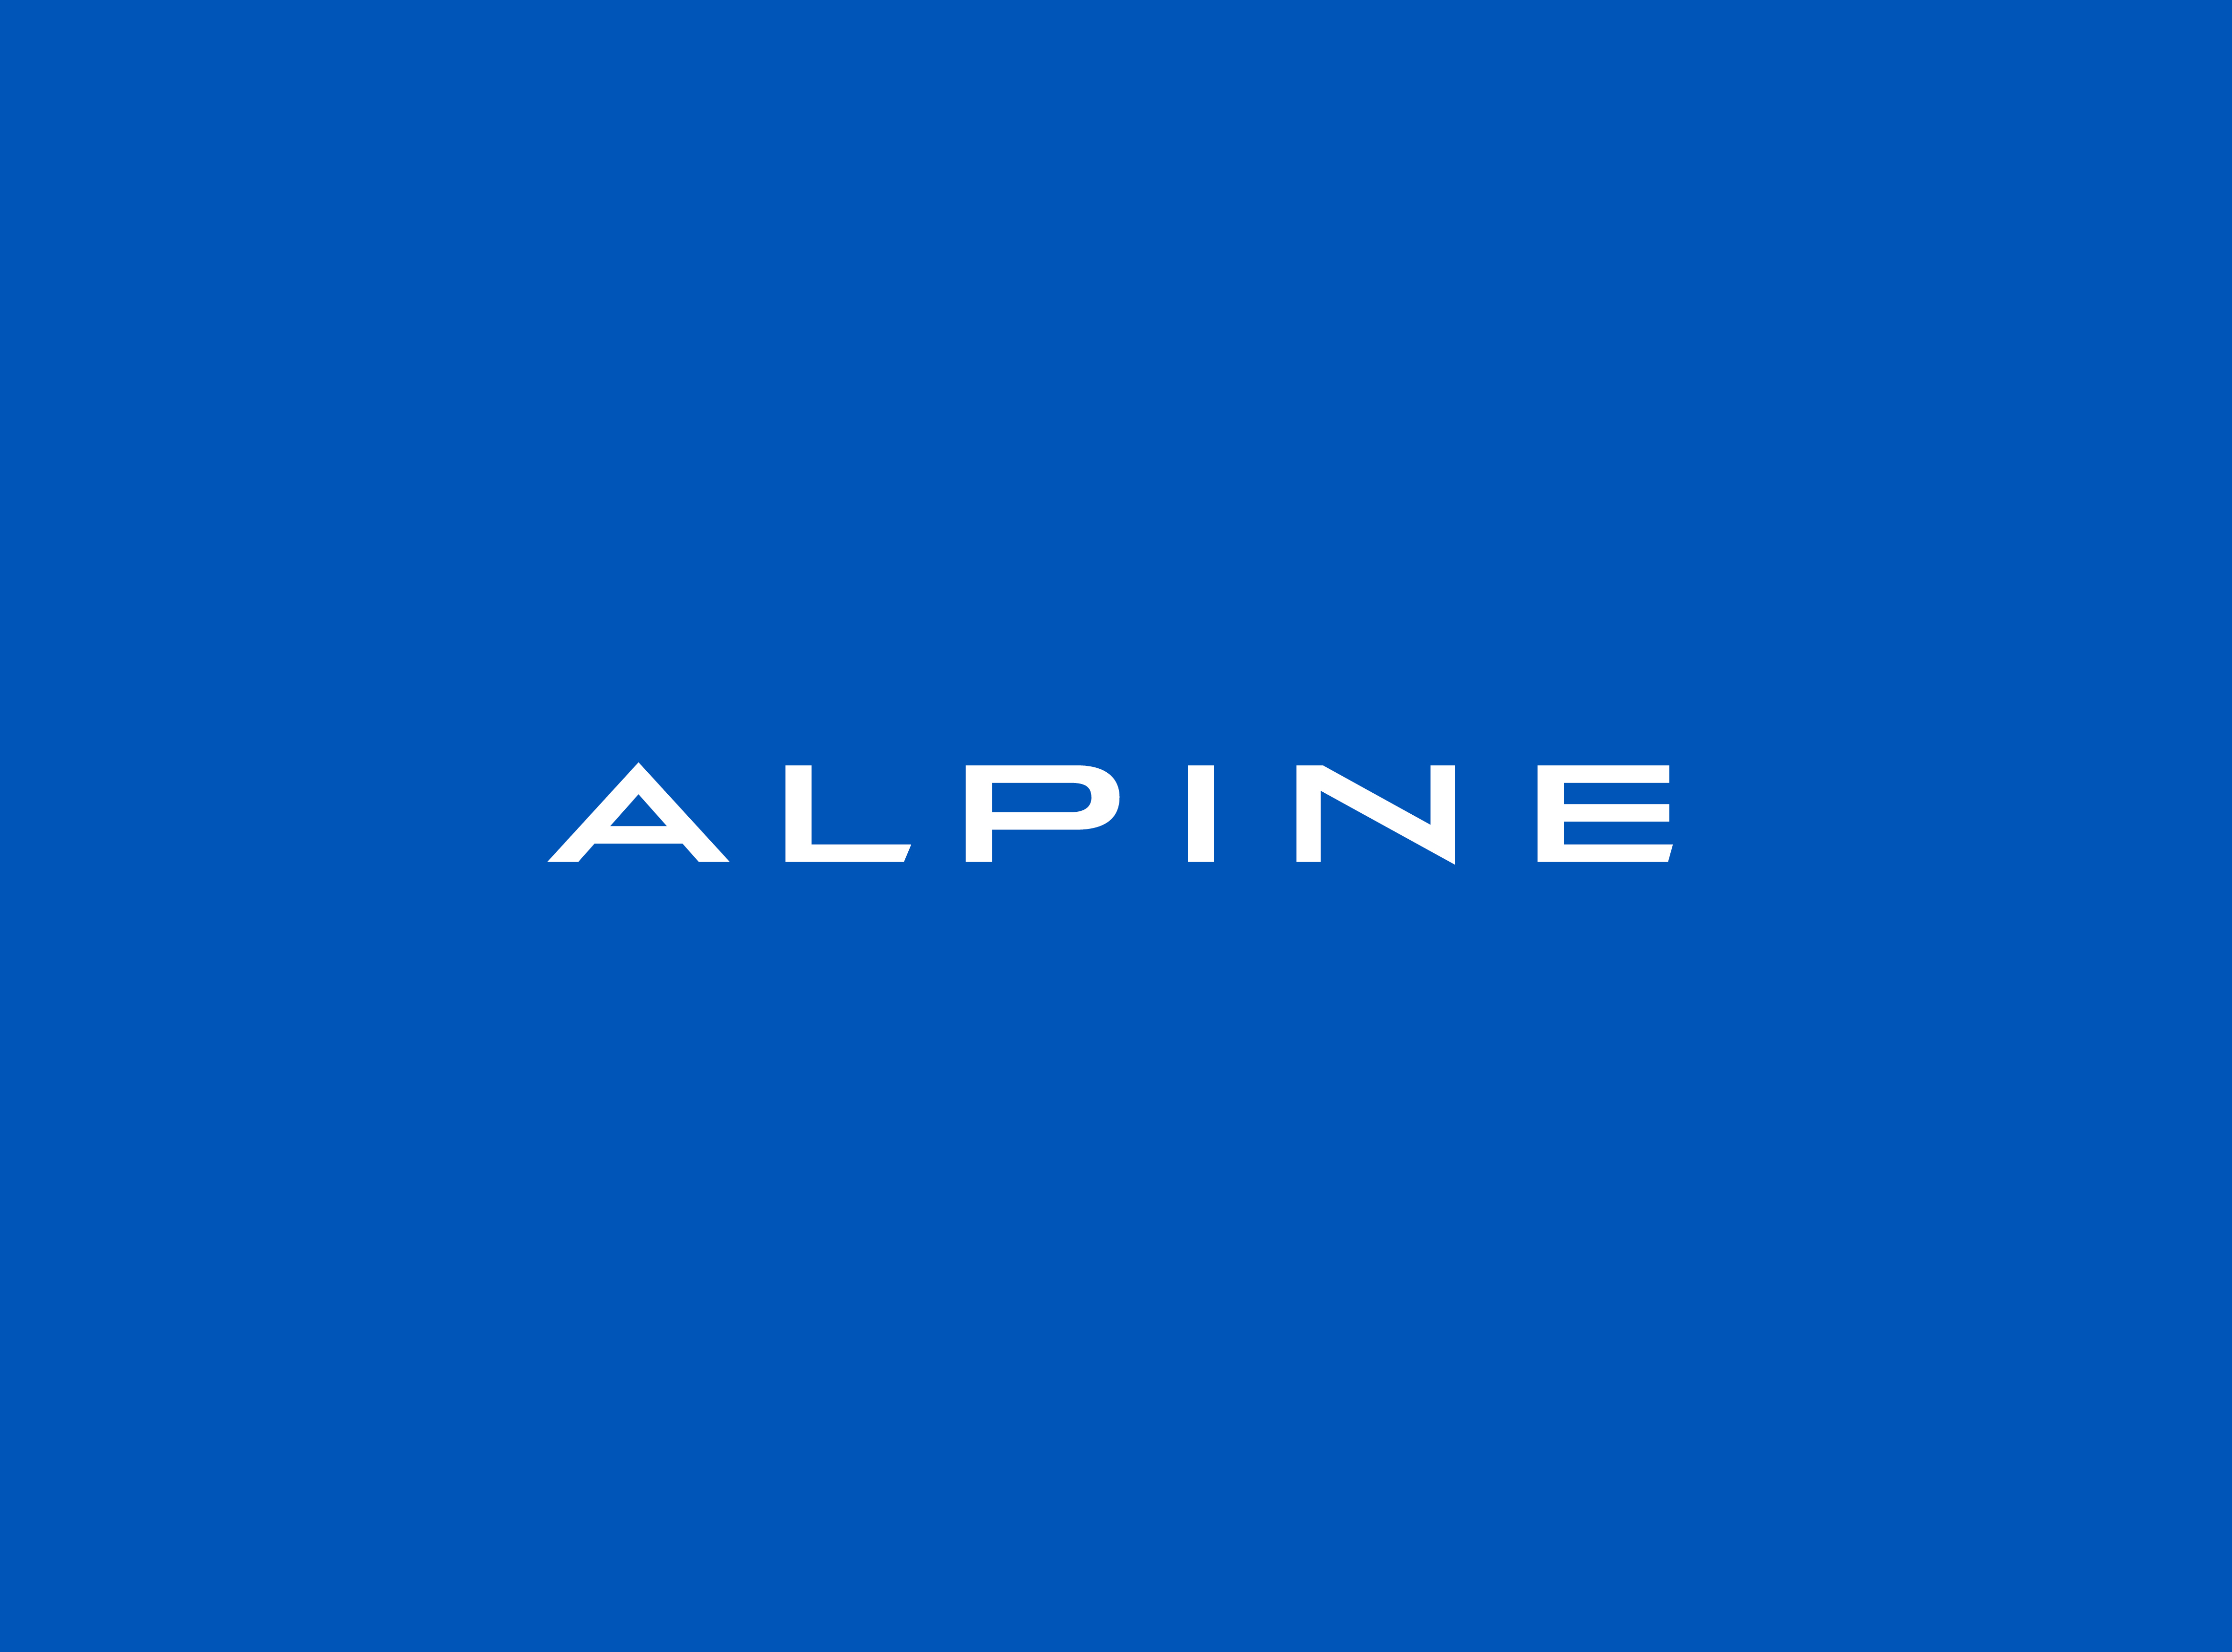 ALPINE Brand Book